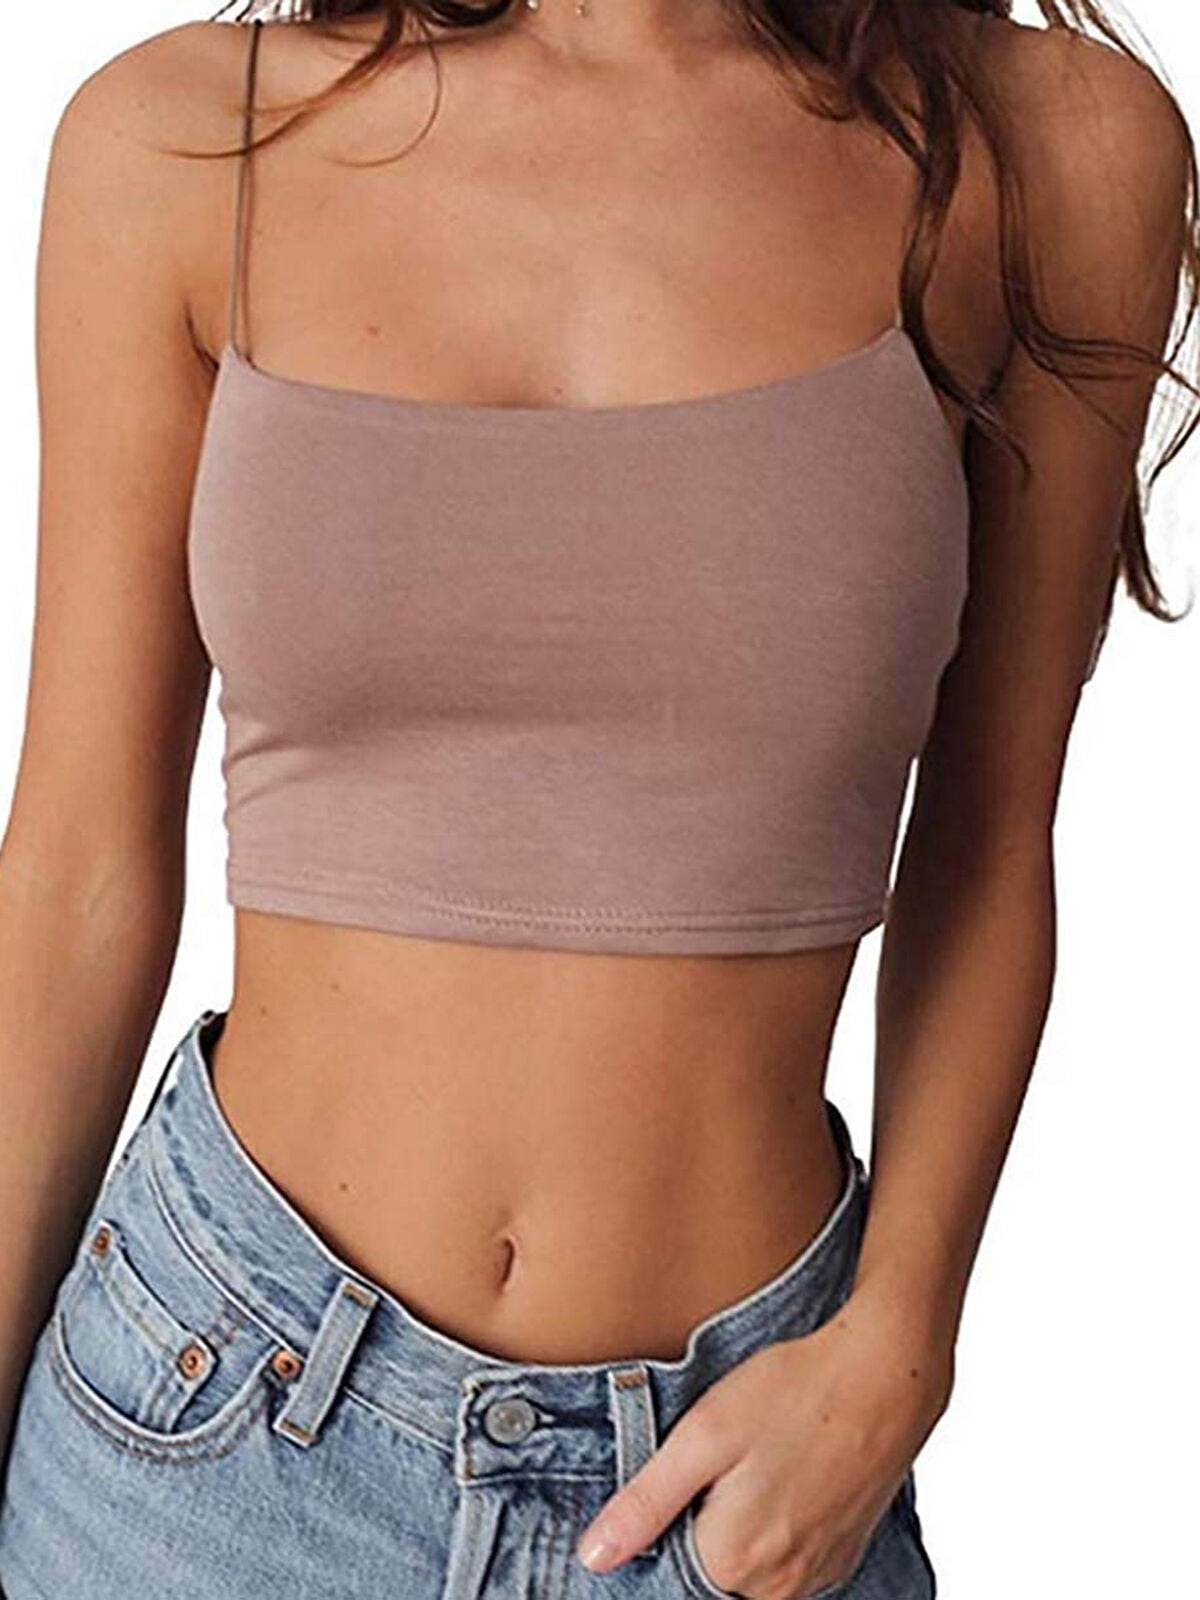 Women Slim Fit Ribbed Tank Tops Crop Top Sleeveless Scoop Neck Vest Cami T-shirt